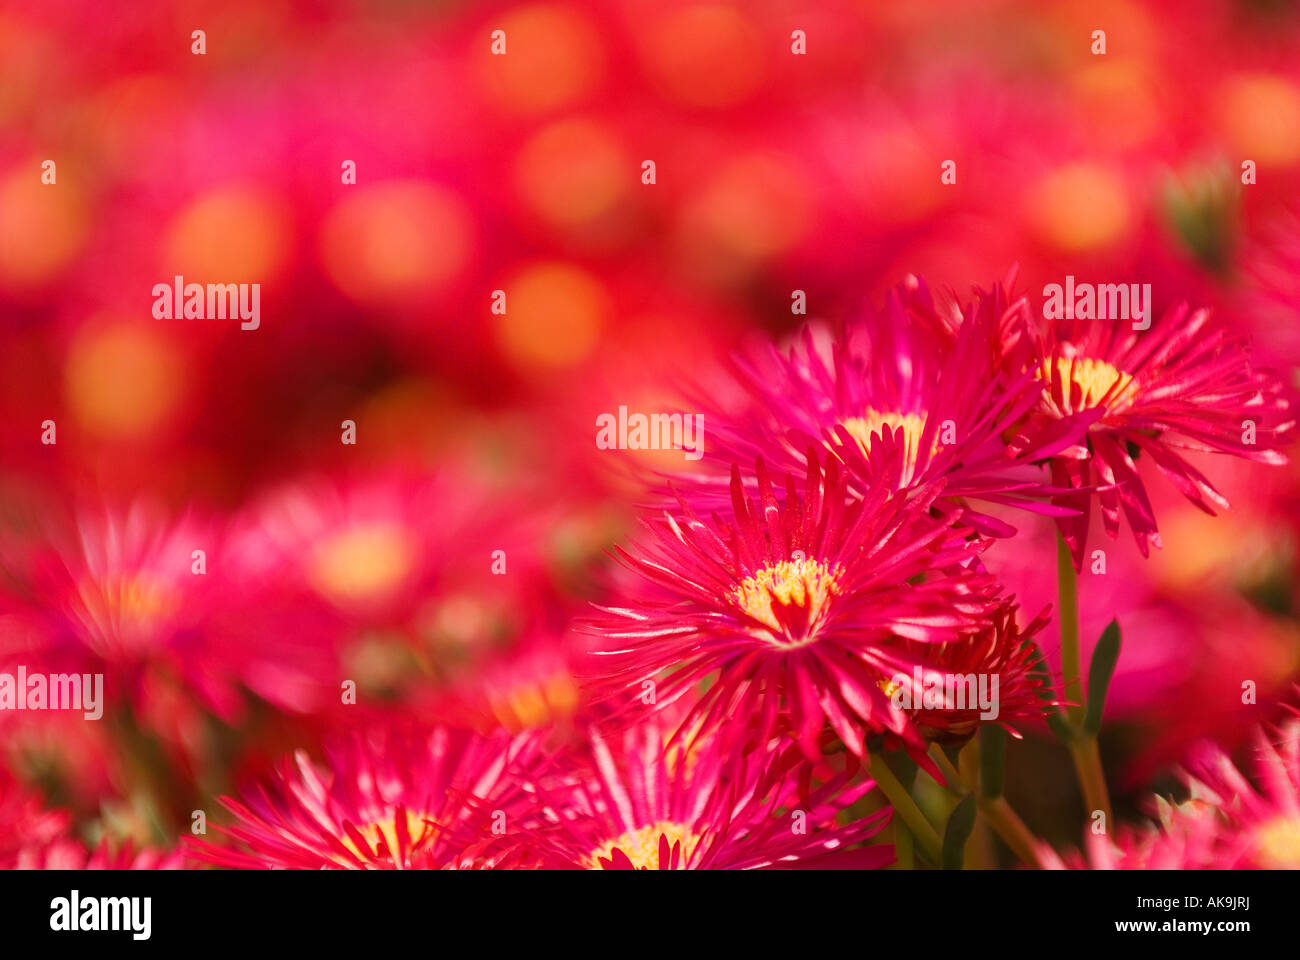 Crimson flowers with yellow centers Stock Photo